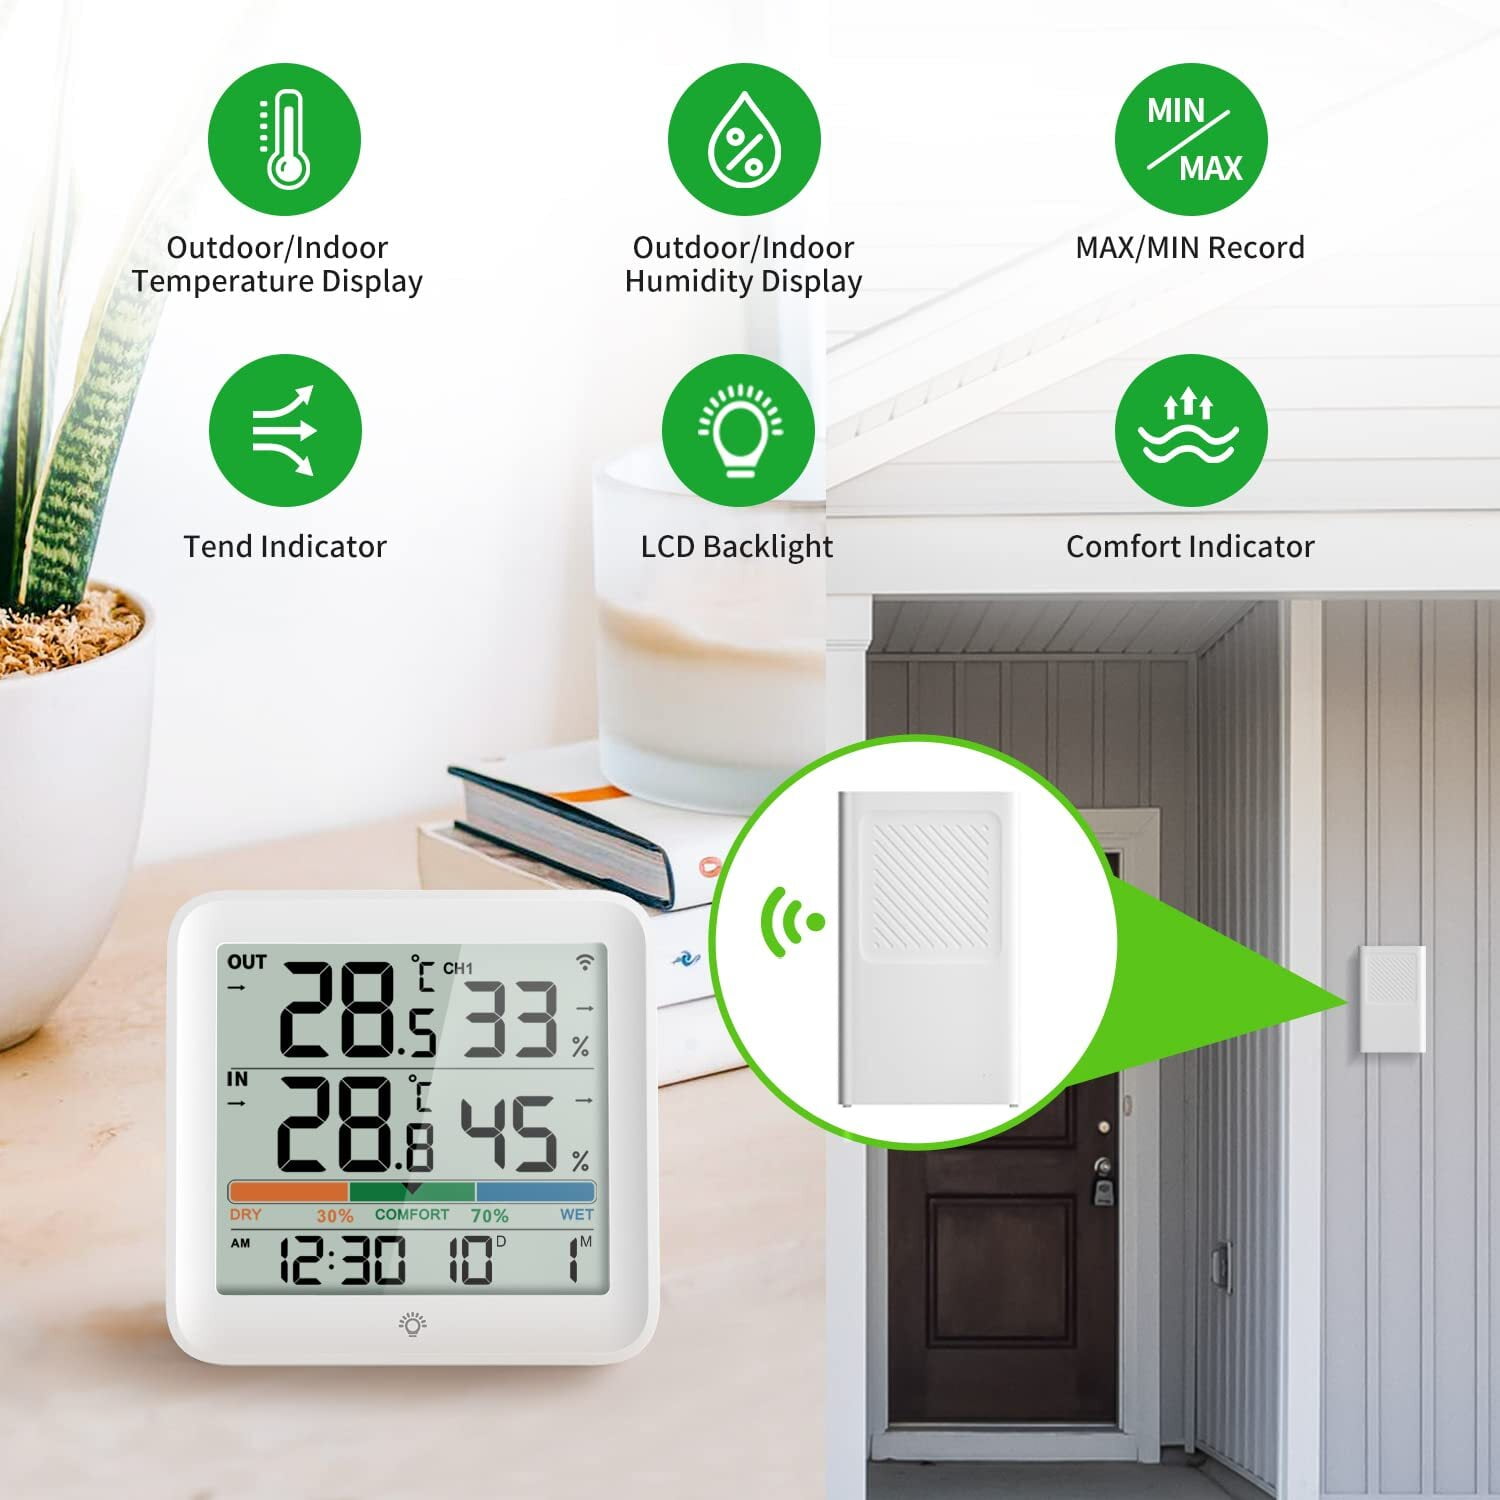 VOCOO Humidity Gauge Indoor Thermometer - Digital Indoor Humidity Sensor  Room Thermometer with Time Date Display, Accurate Hygrometer Temp Meter for